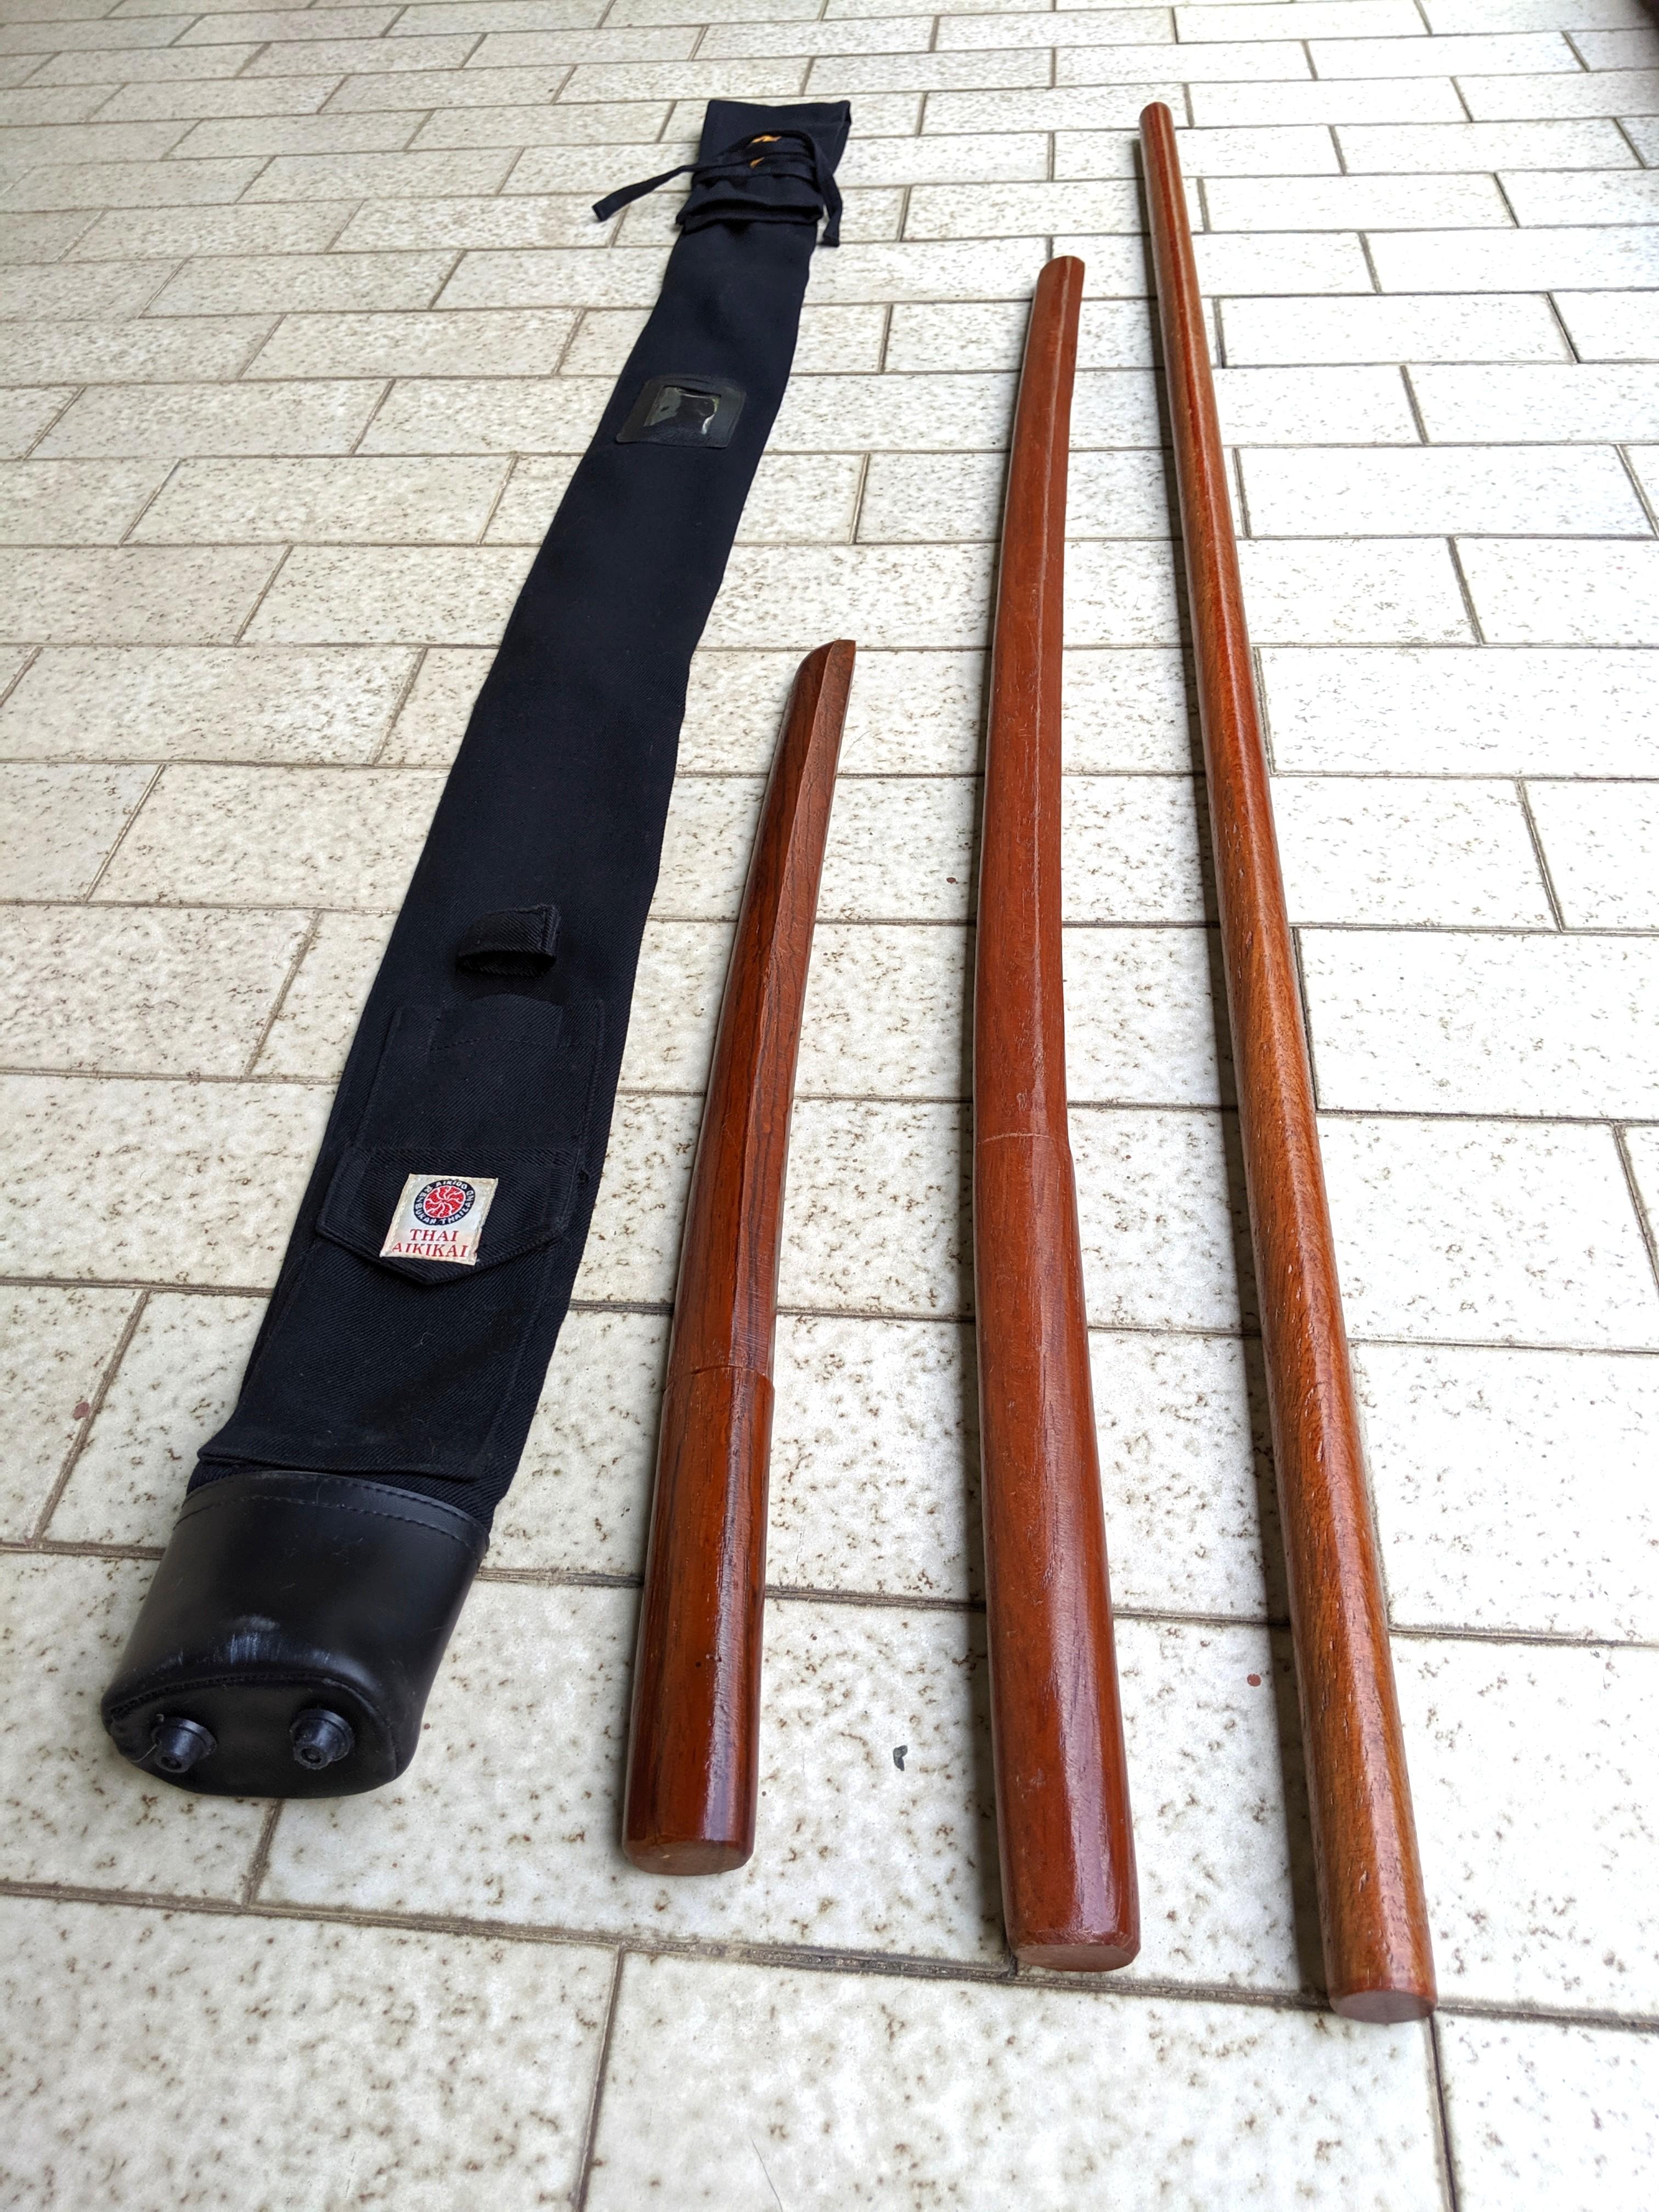 https://media.karousell.com/media/photos/products/2019/10/21/aikido_full_set_bokken__jo_tanto_wooden_staff__sword__1571593527_9d069478_progressive.jpg